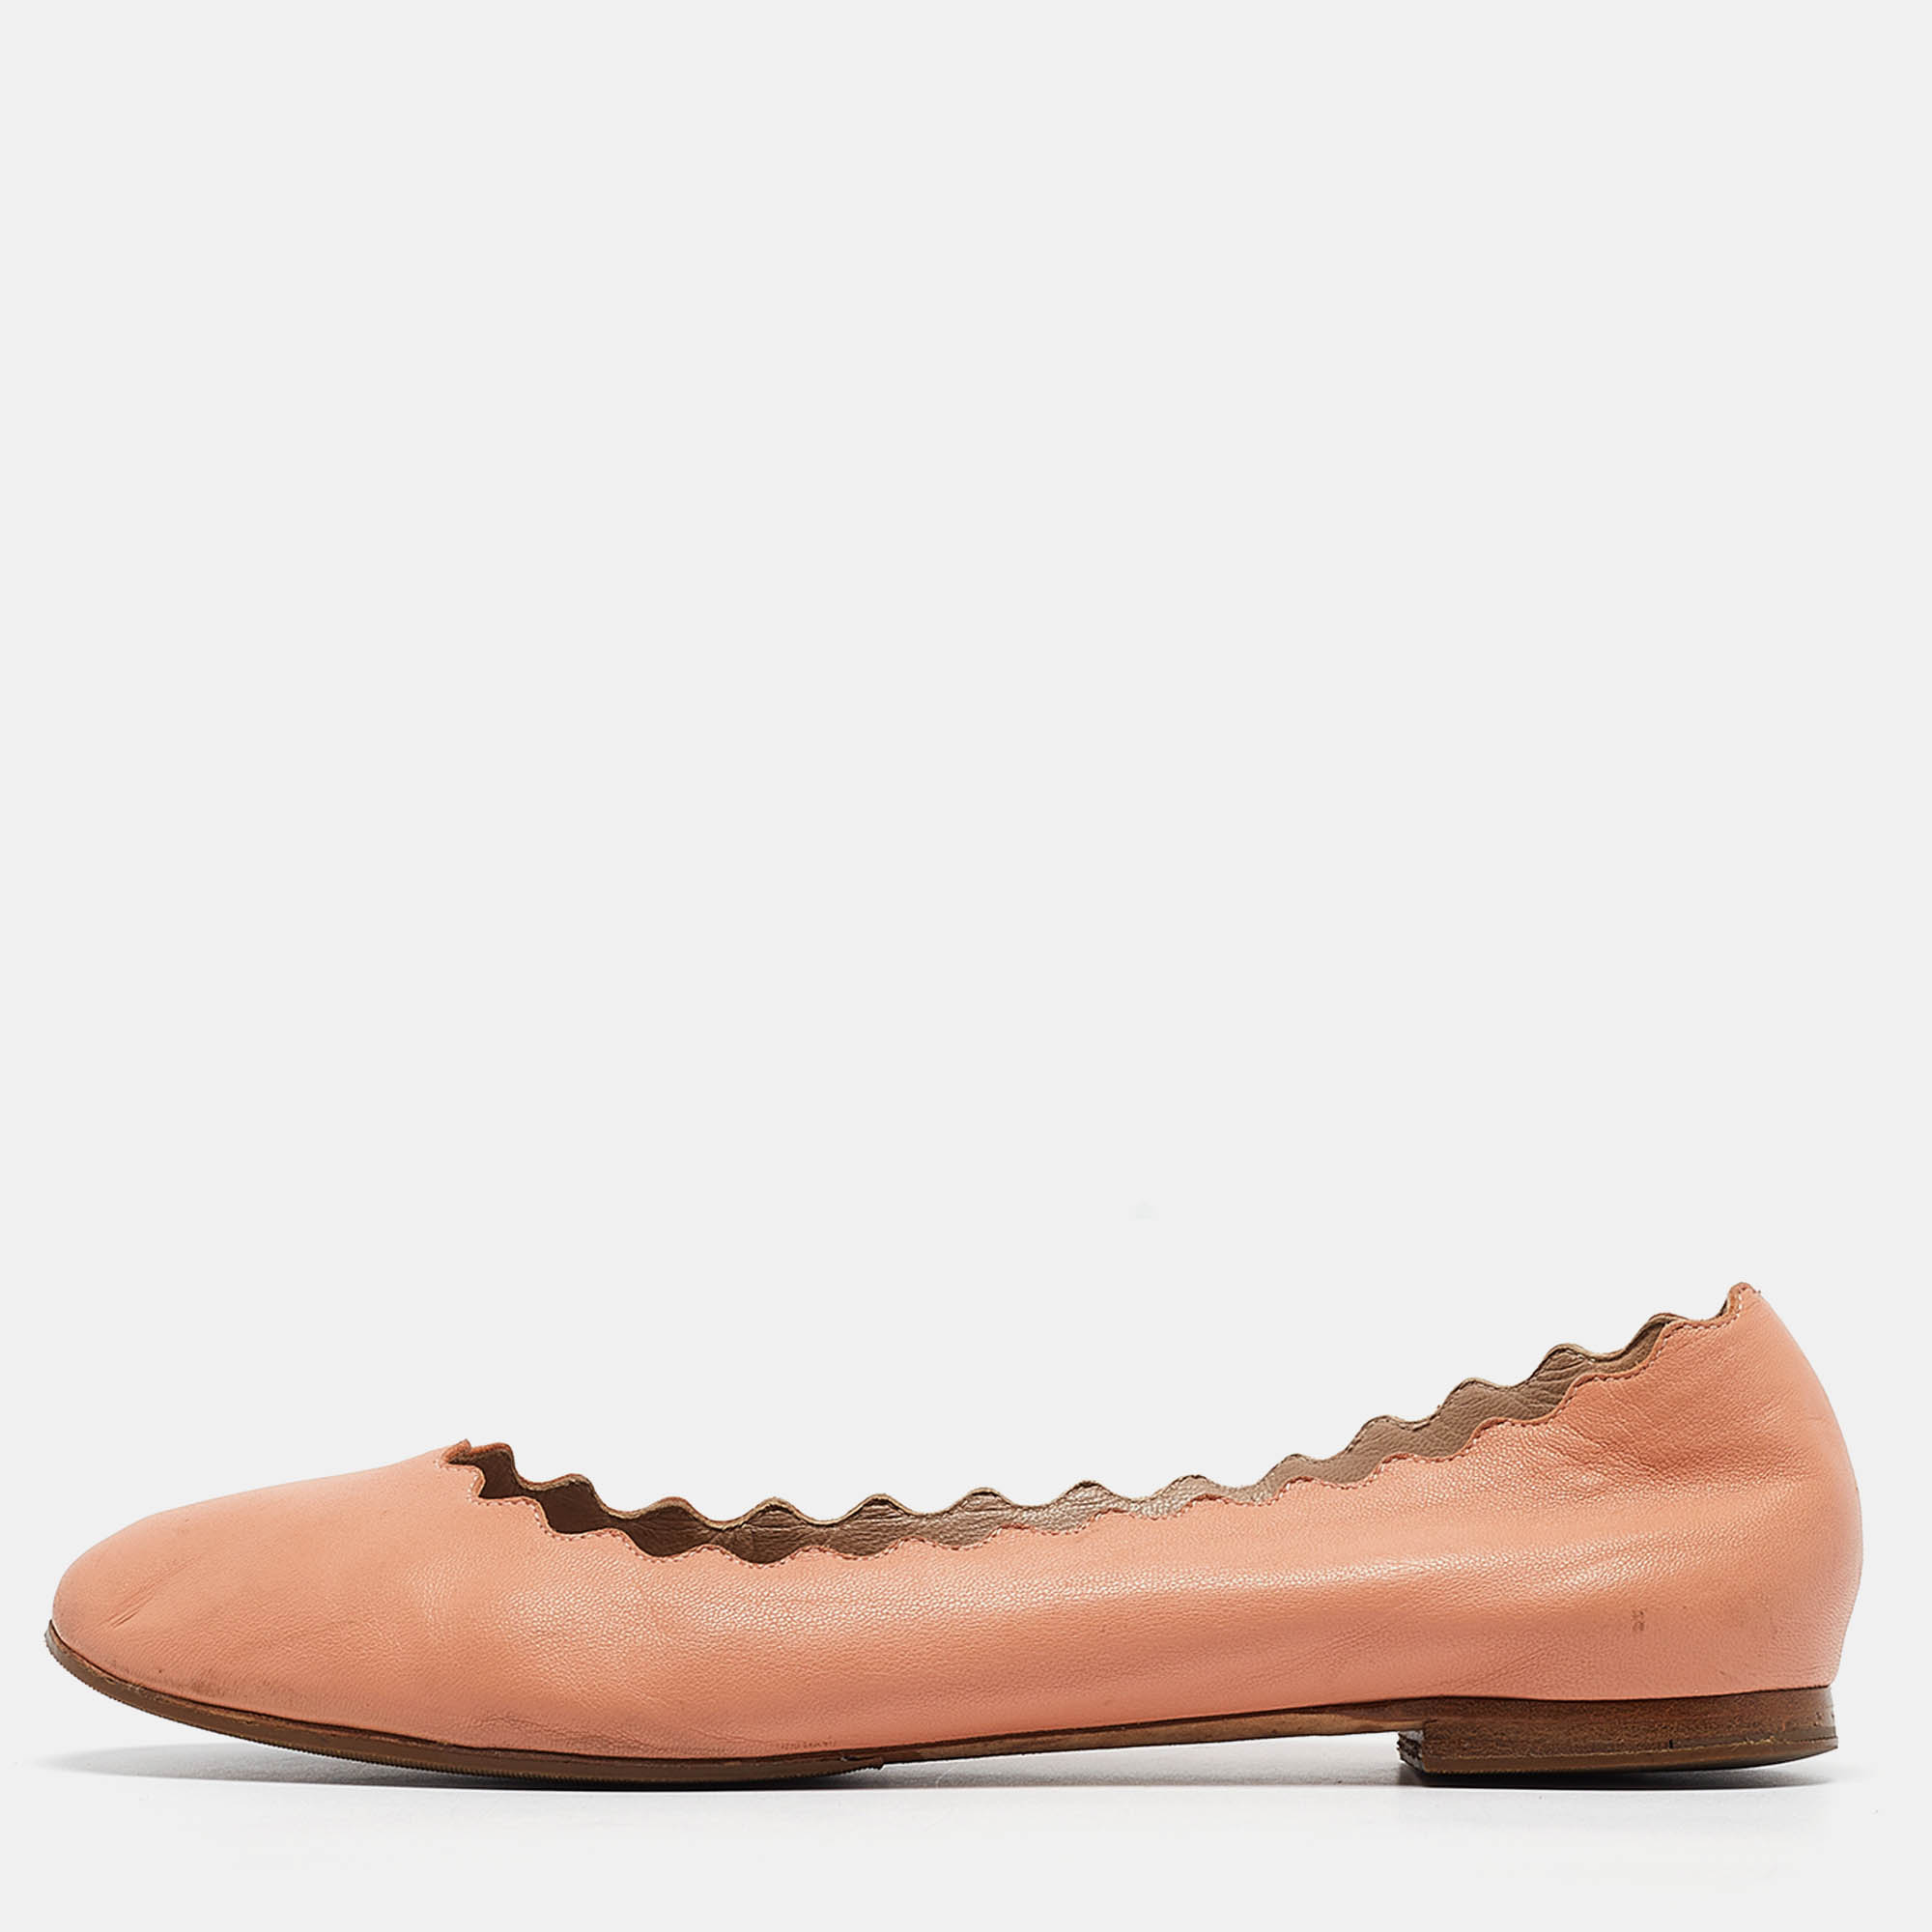 

Chloe Peach Pink Scalloped Leather Lauren Ballet Flats Size